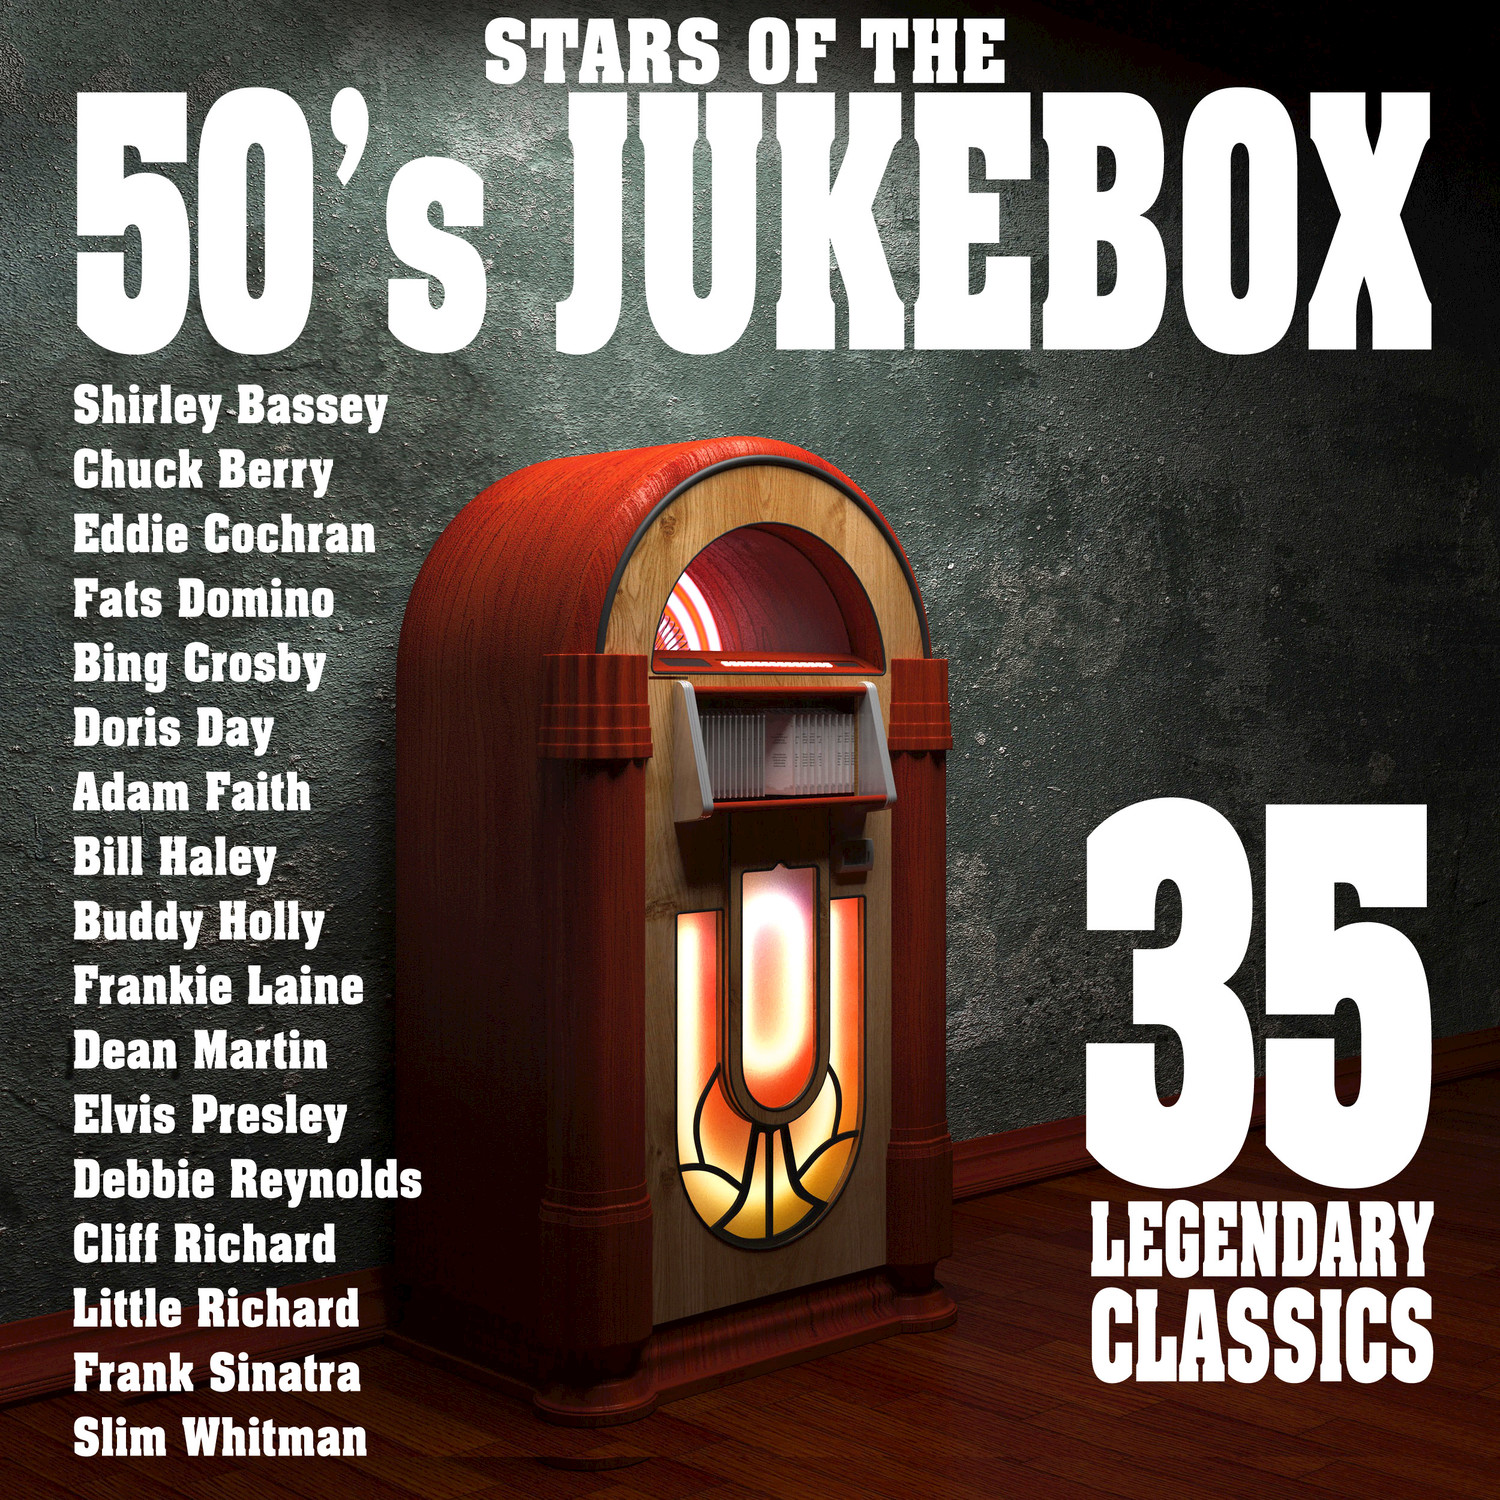 Stars of the 50s Jukebox (35 Legendary Classics)